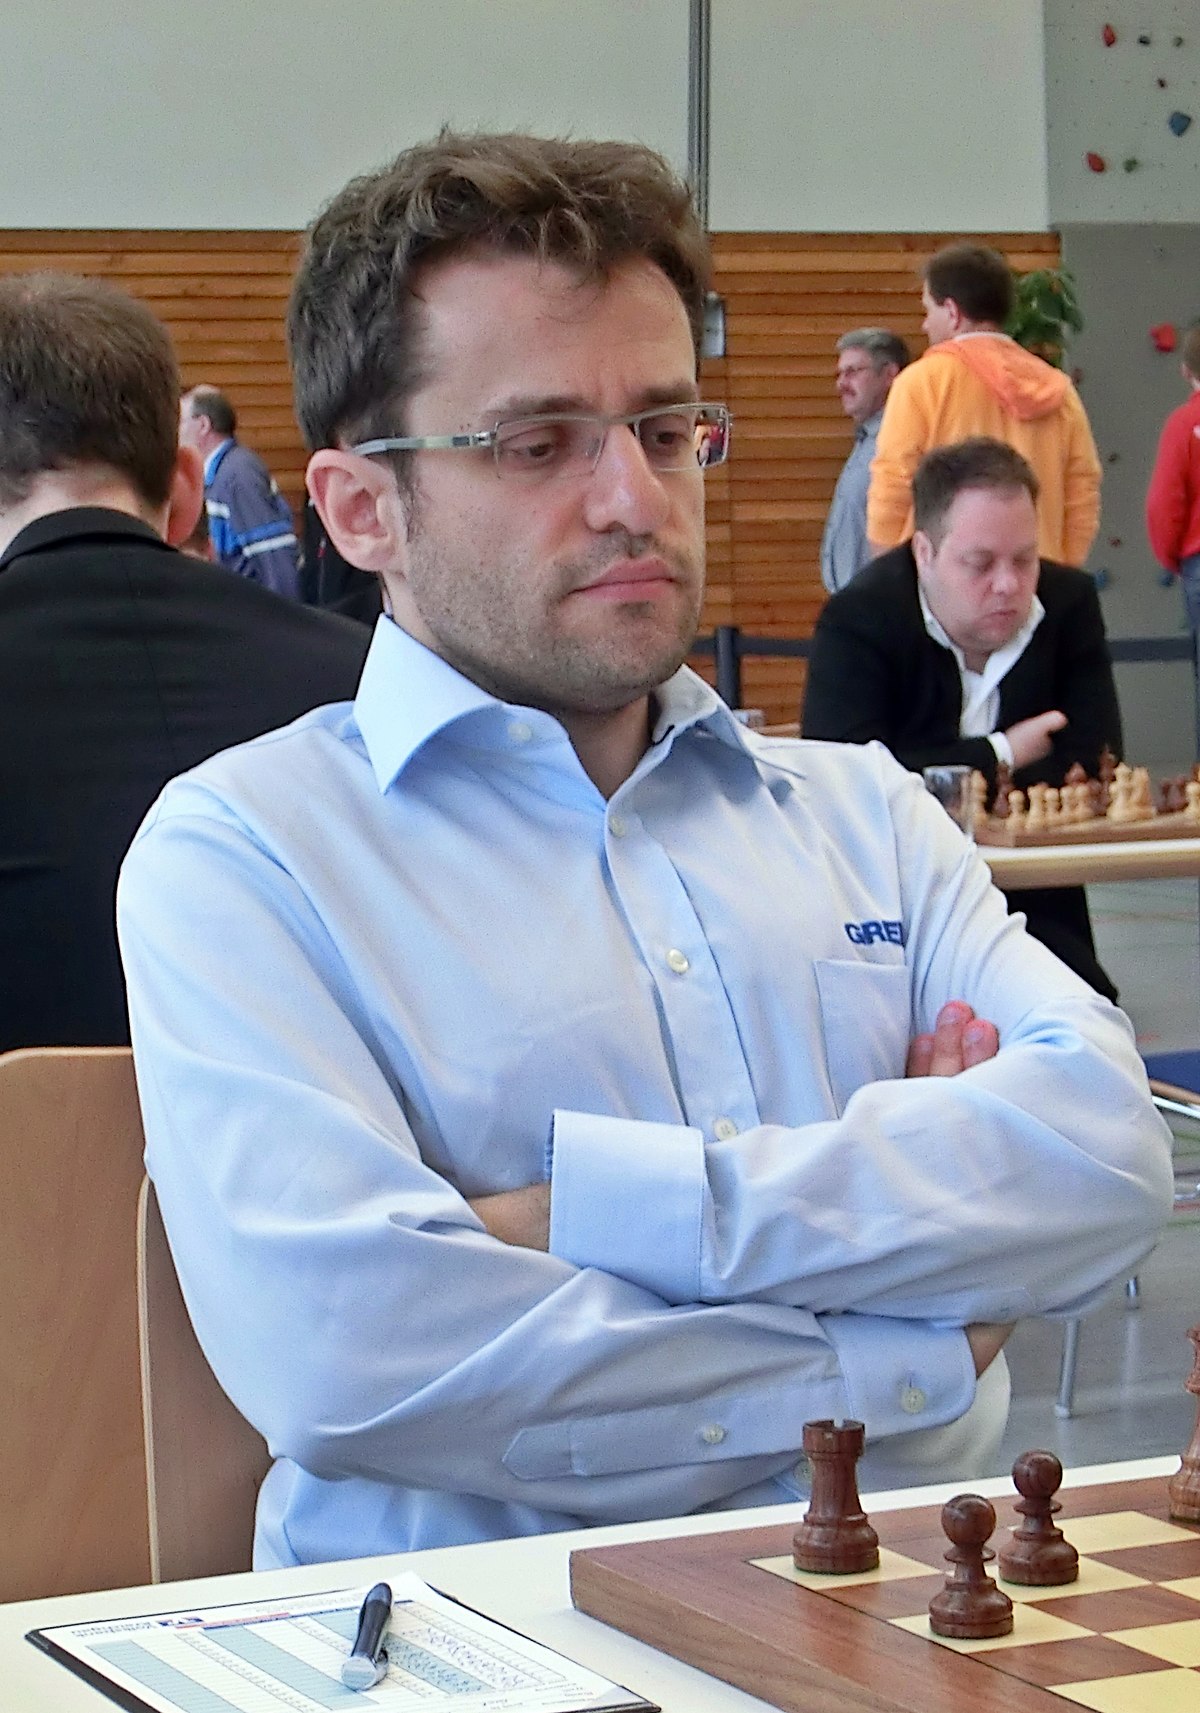 Chess World Cup 2005 - Wikipedia